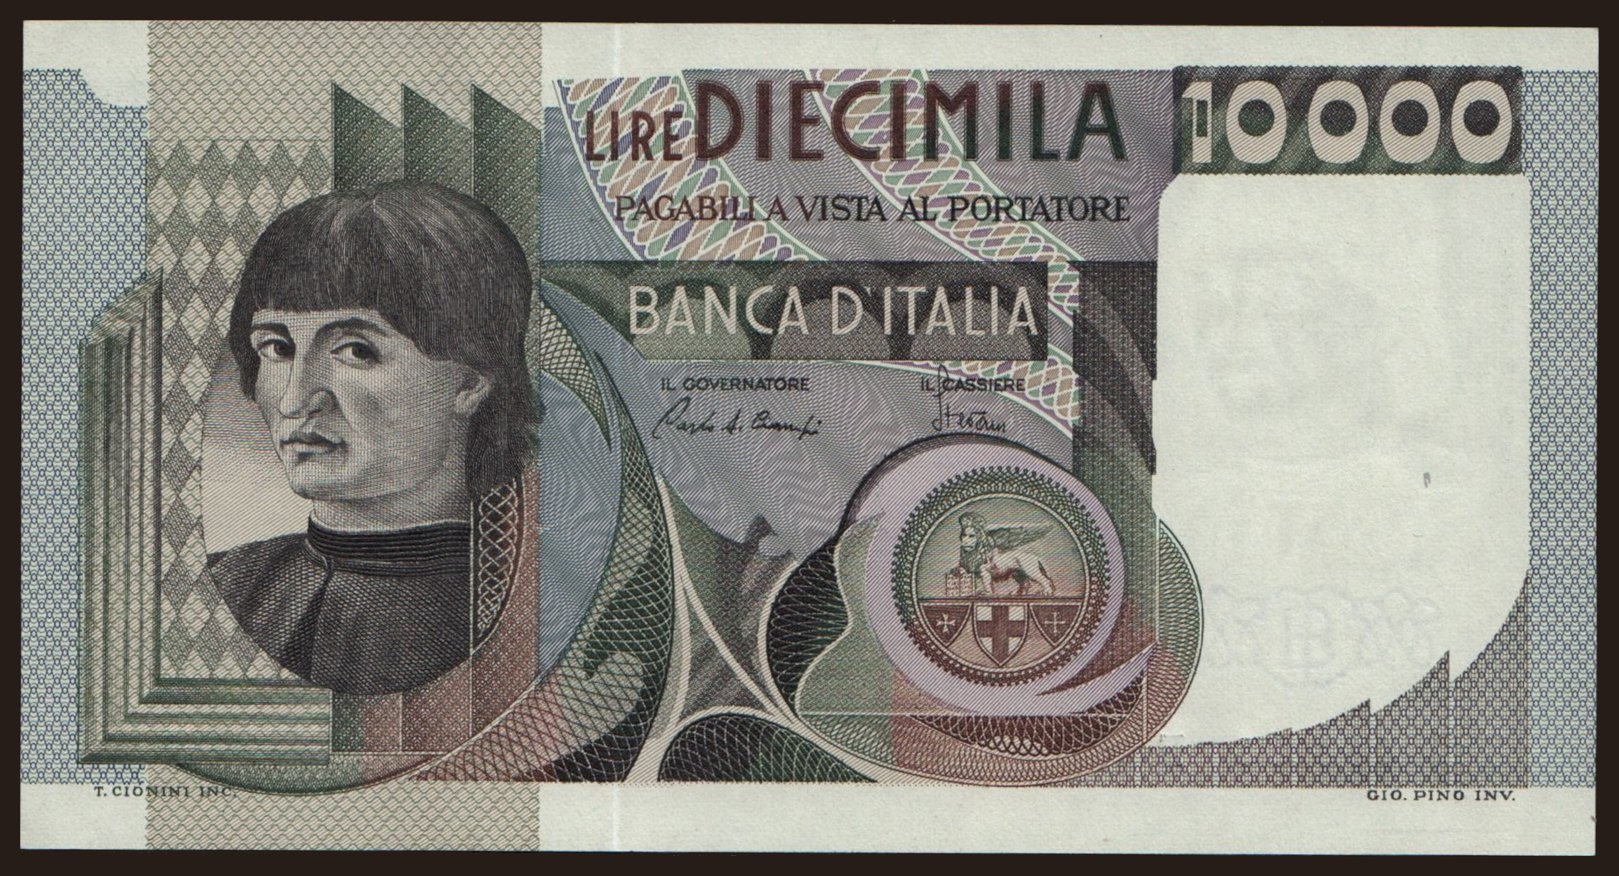 10.000 lire, 1982